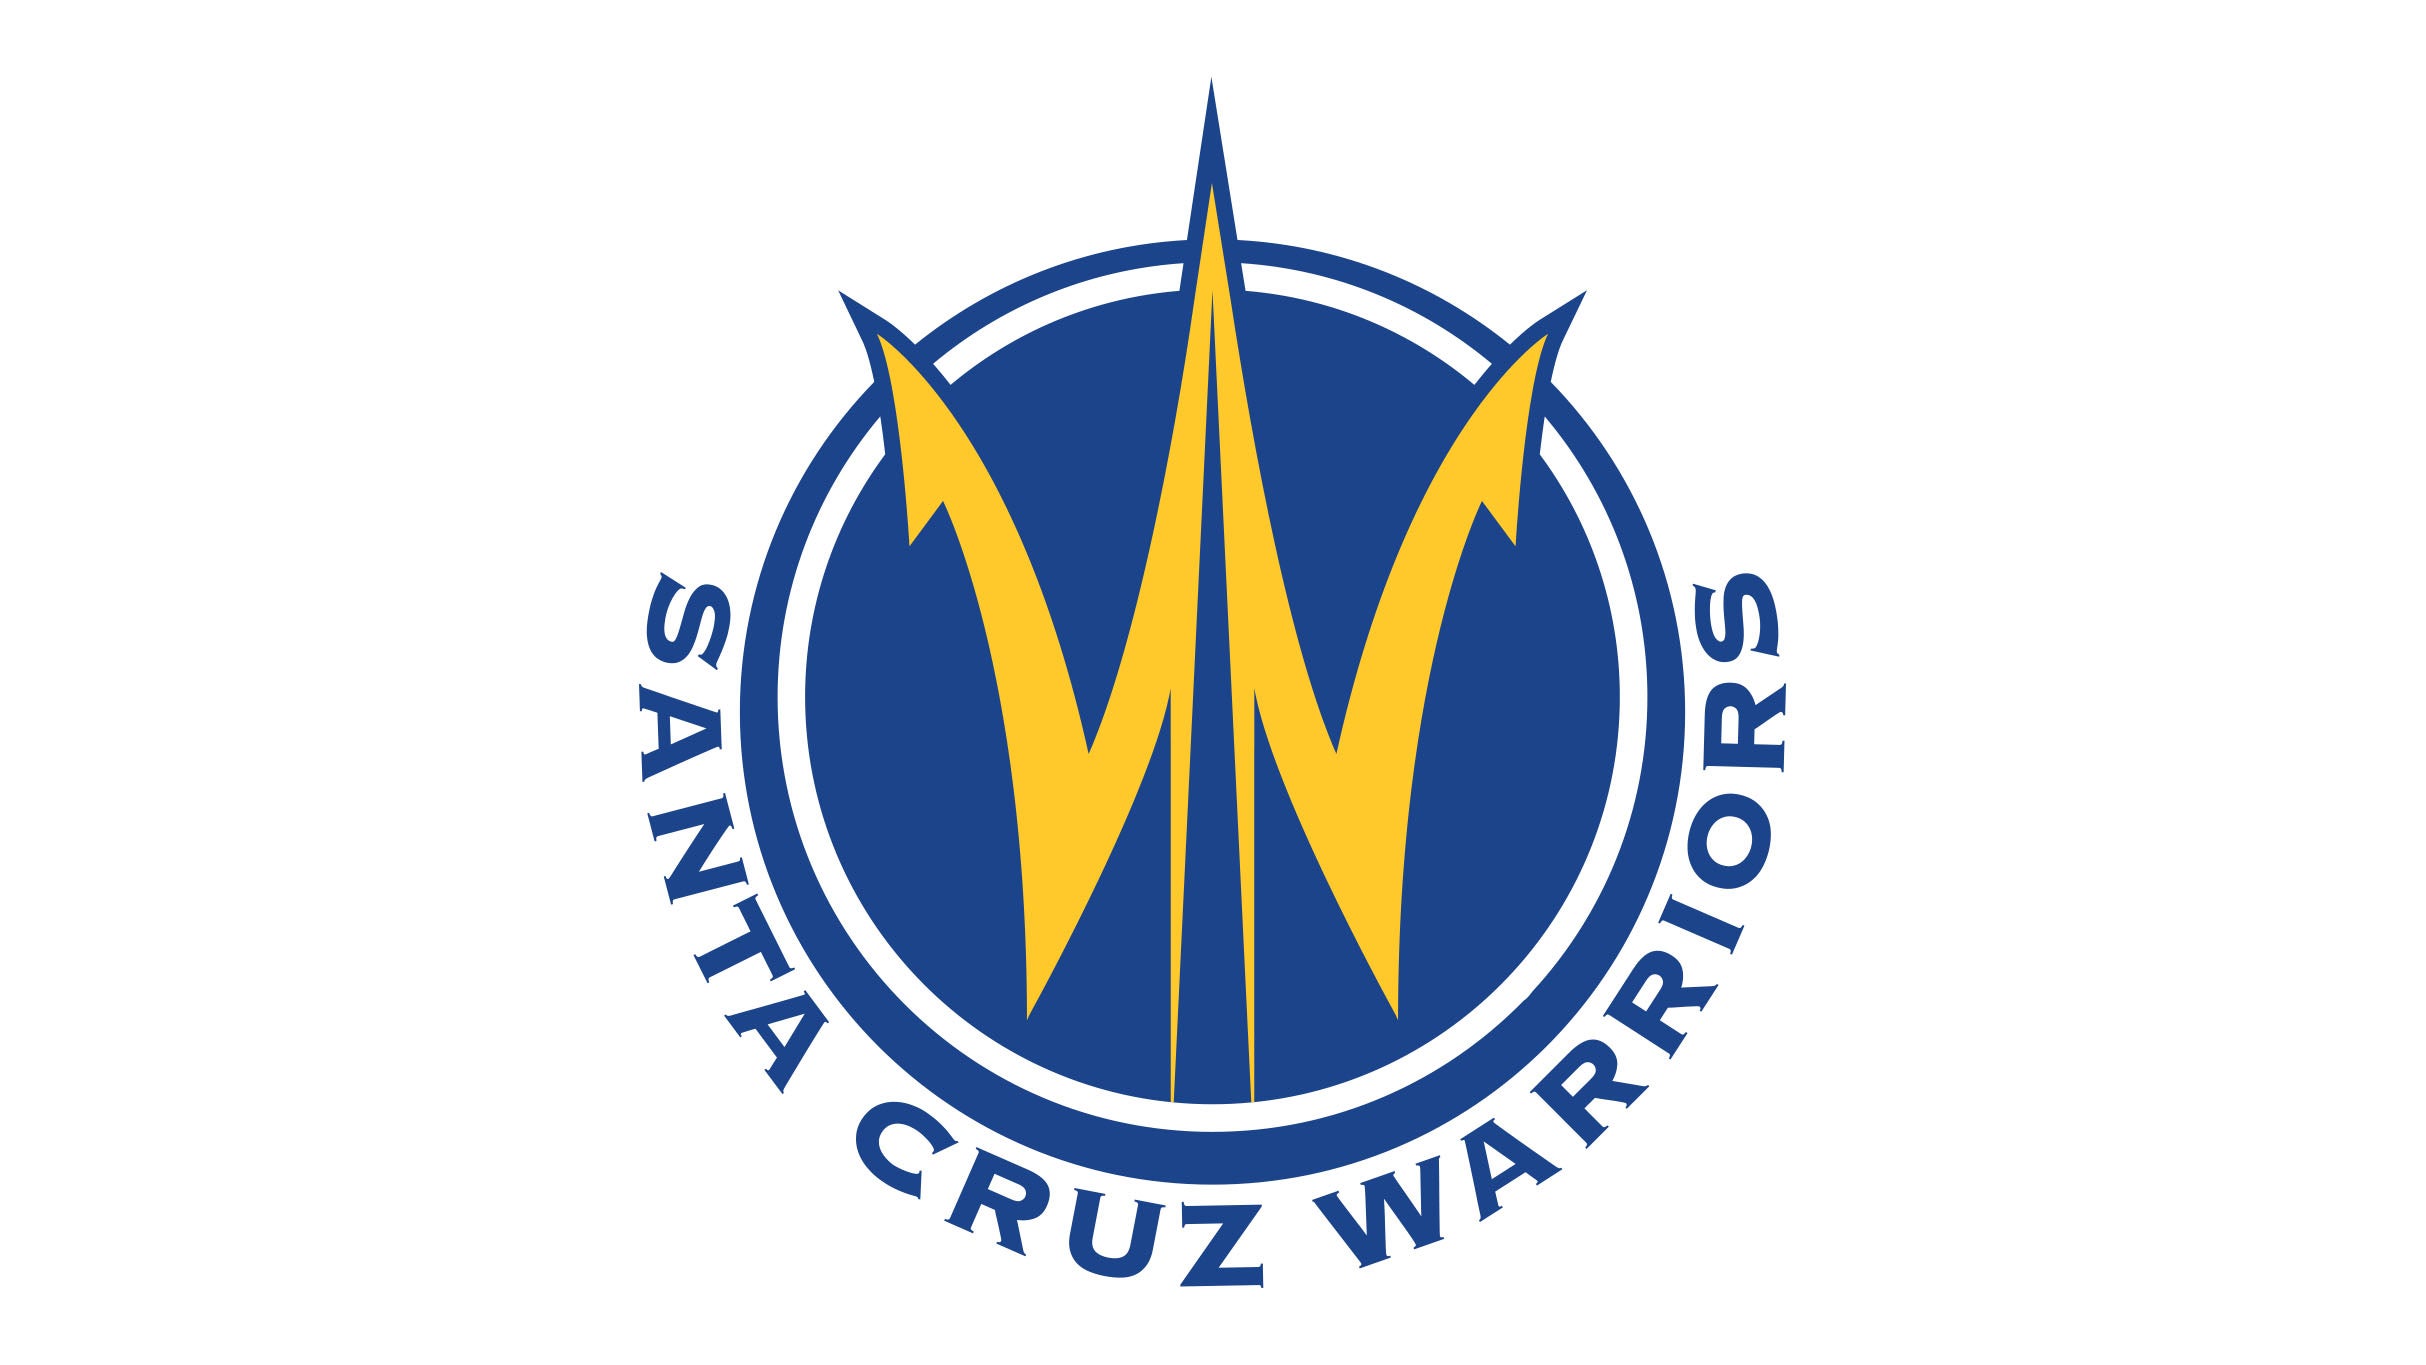 Santa Cruz Warriors vs. Raptors 905 in Santa Cruz promo photo for Dub Club presale offer code